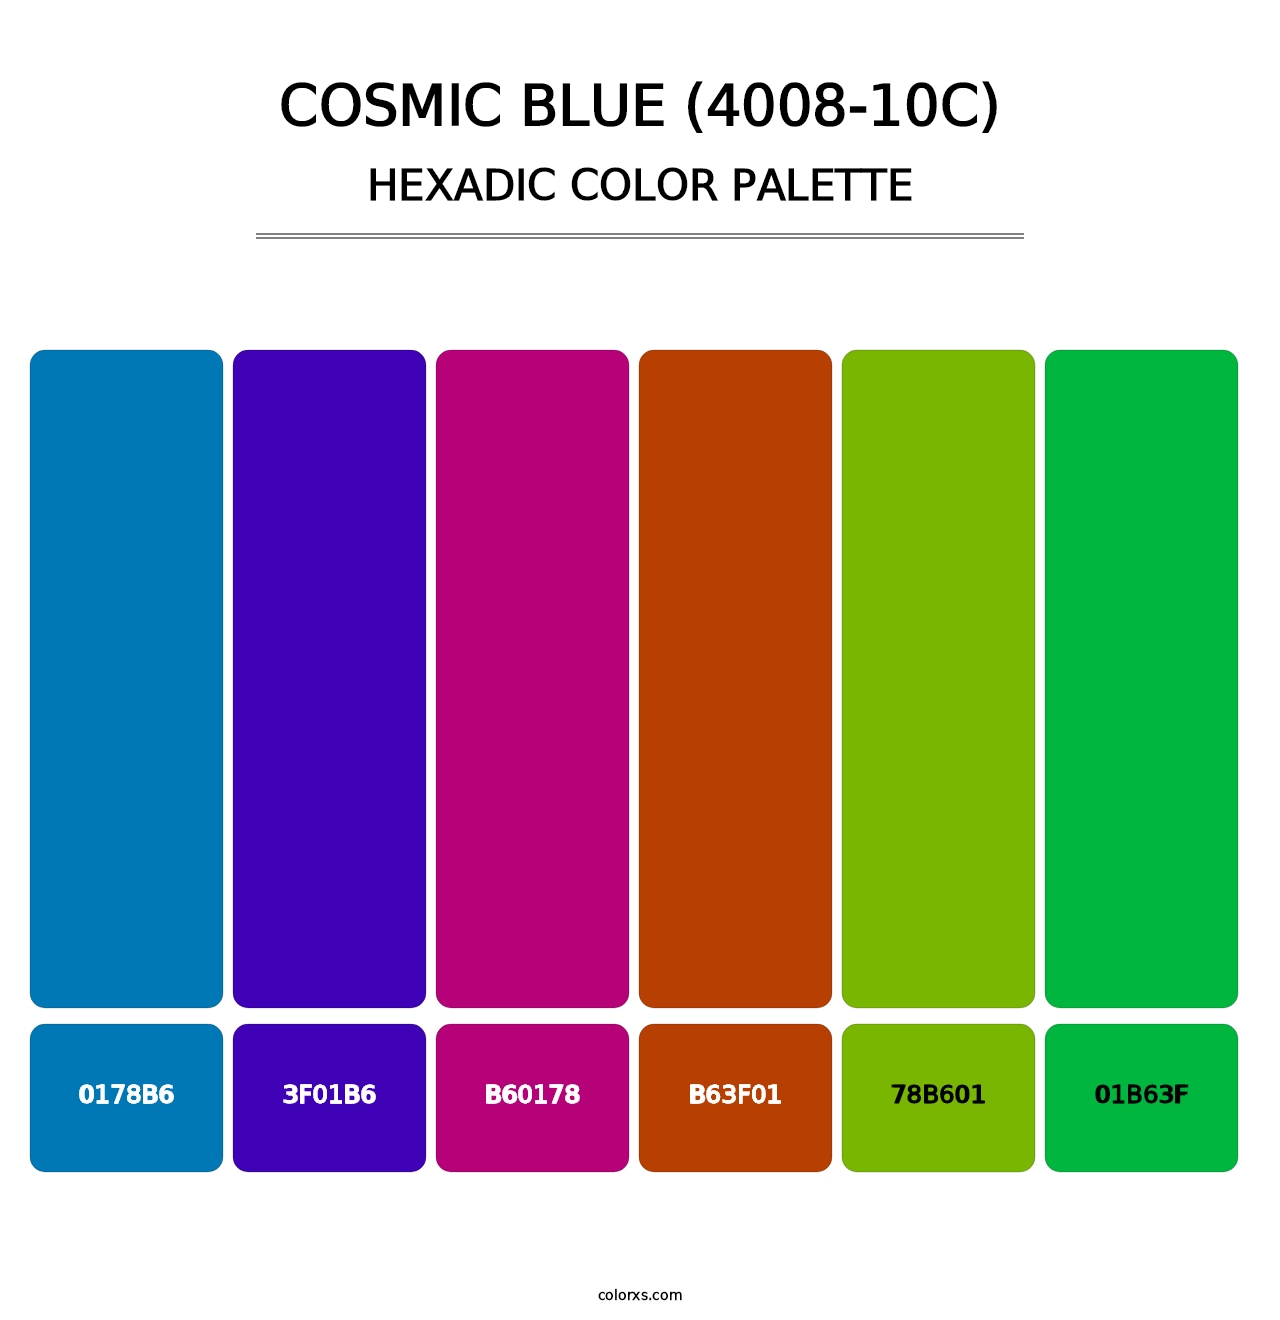 Cosmic Blue (4008-10C) - Hexadic Color Palette